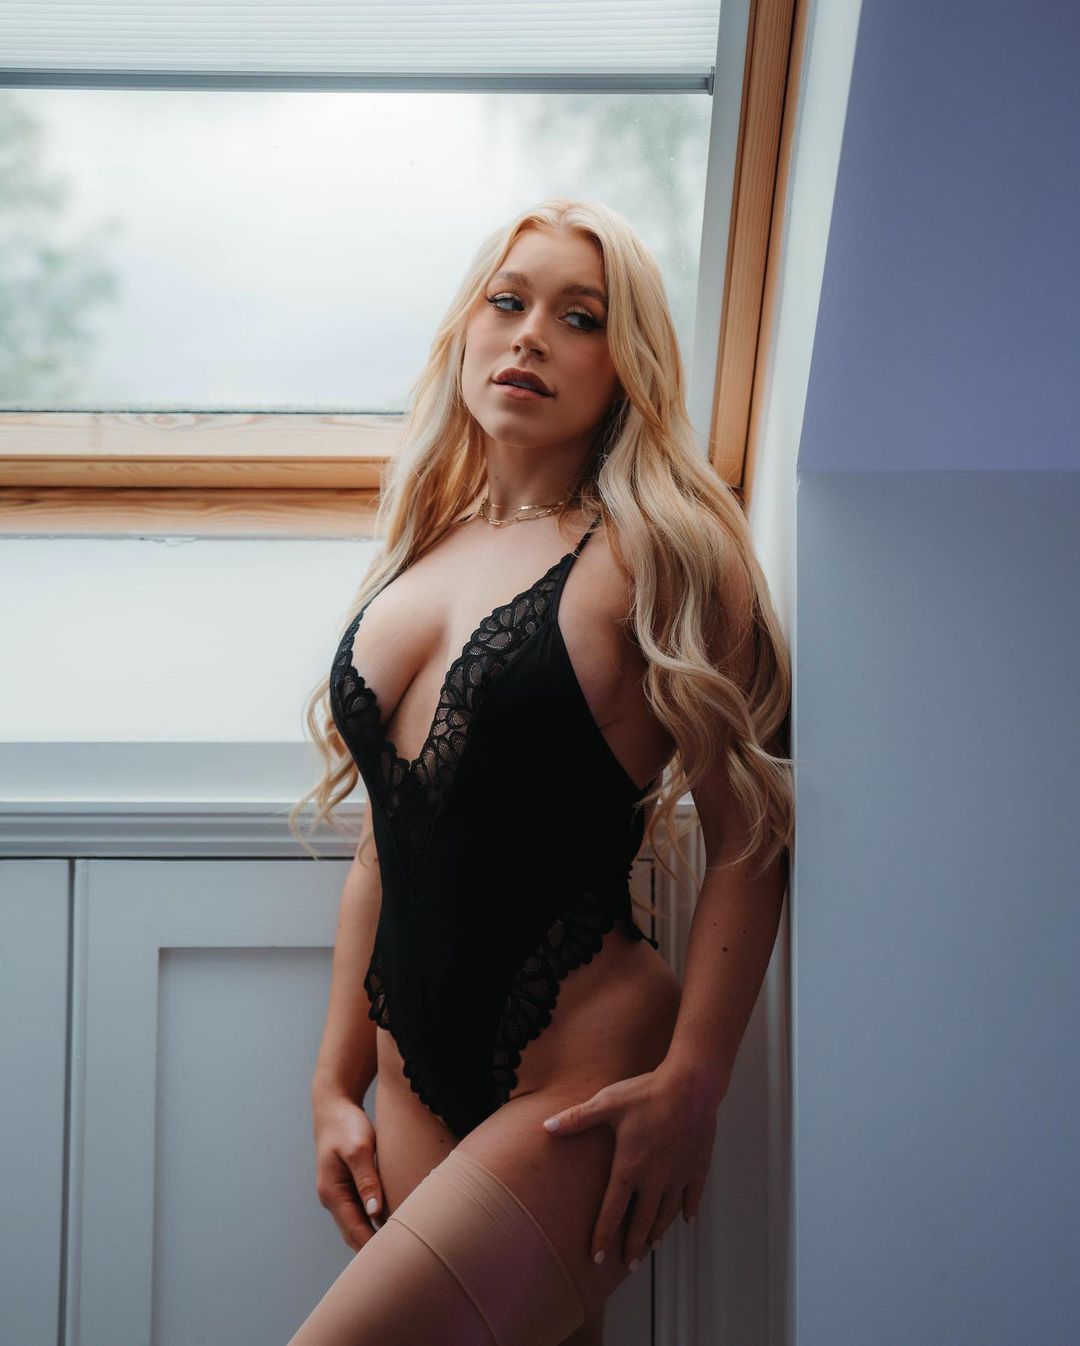 Elle Brooke (Instagram) - Free nude pics, galleries & more at Babepedia